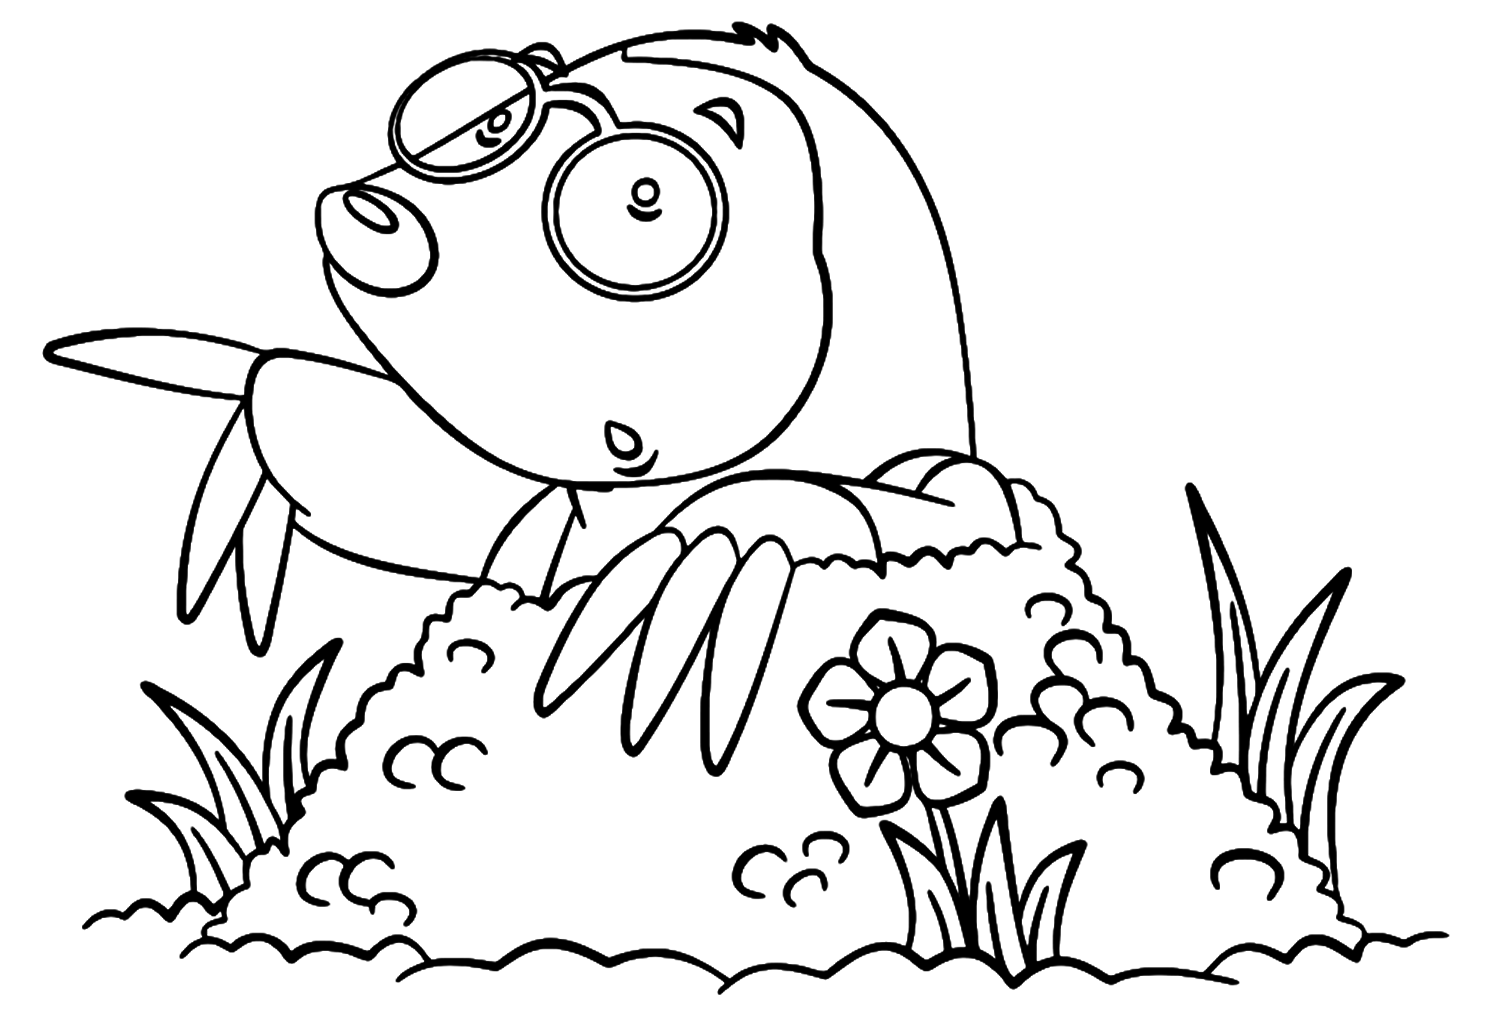 Topo en estilo de dibujos animados de Mole